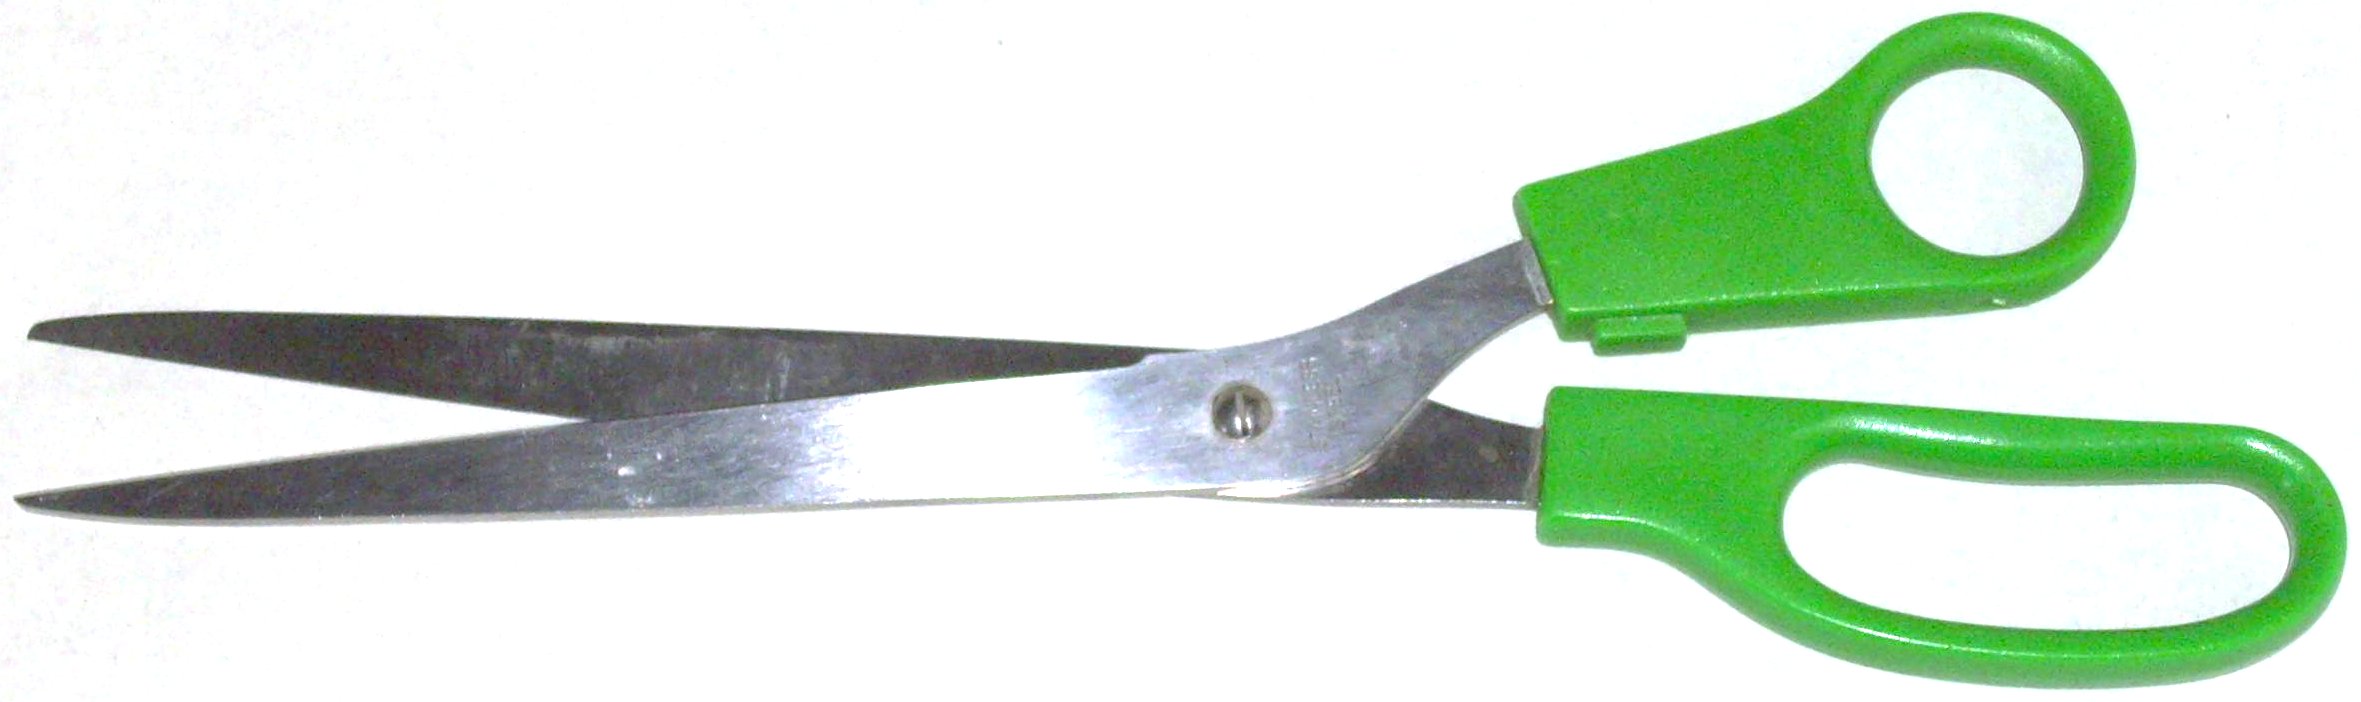 wallpaper scissors,tool,slip joint pliers,file,chisel,metalworking hand tool